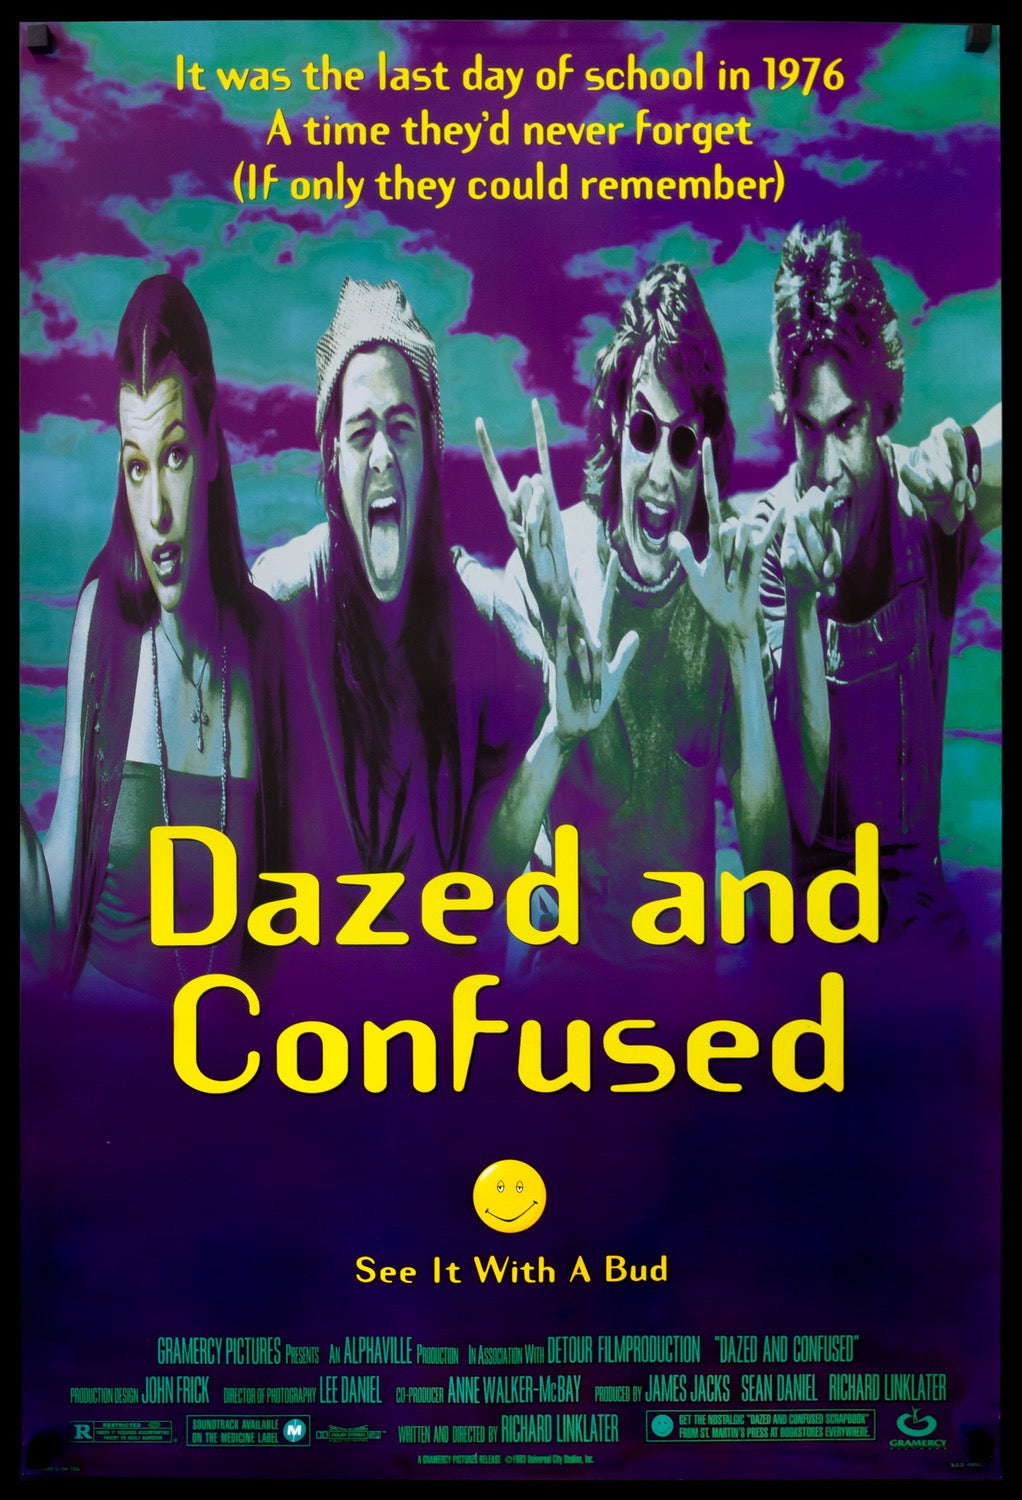 Dazed and Confused (1993) original movie poster for sale at Original Film Art